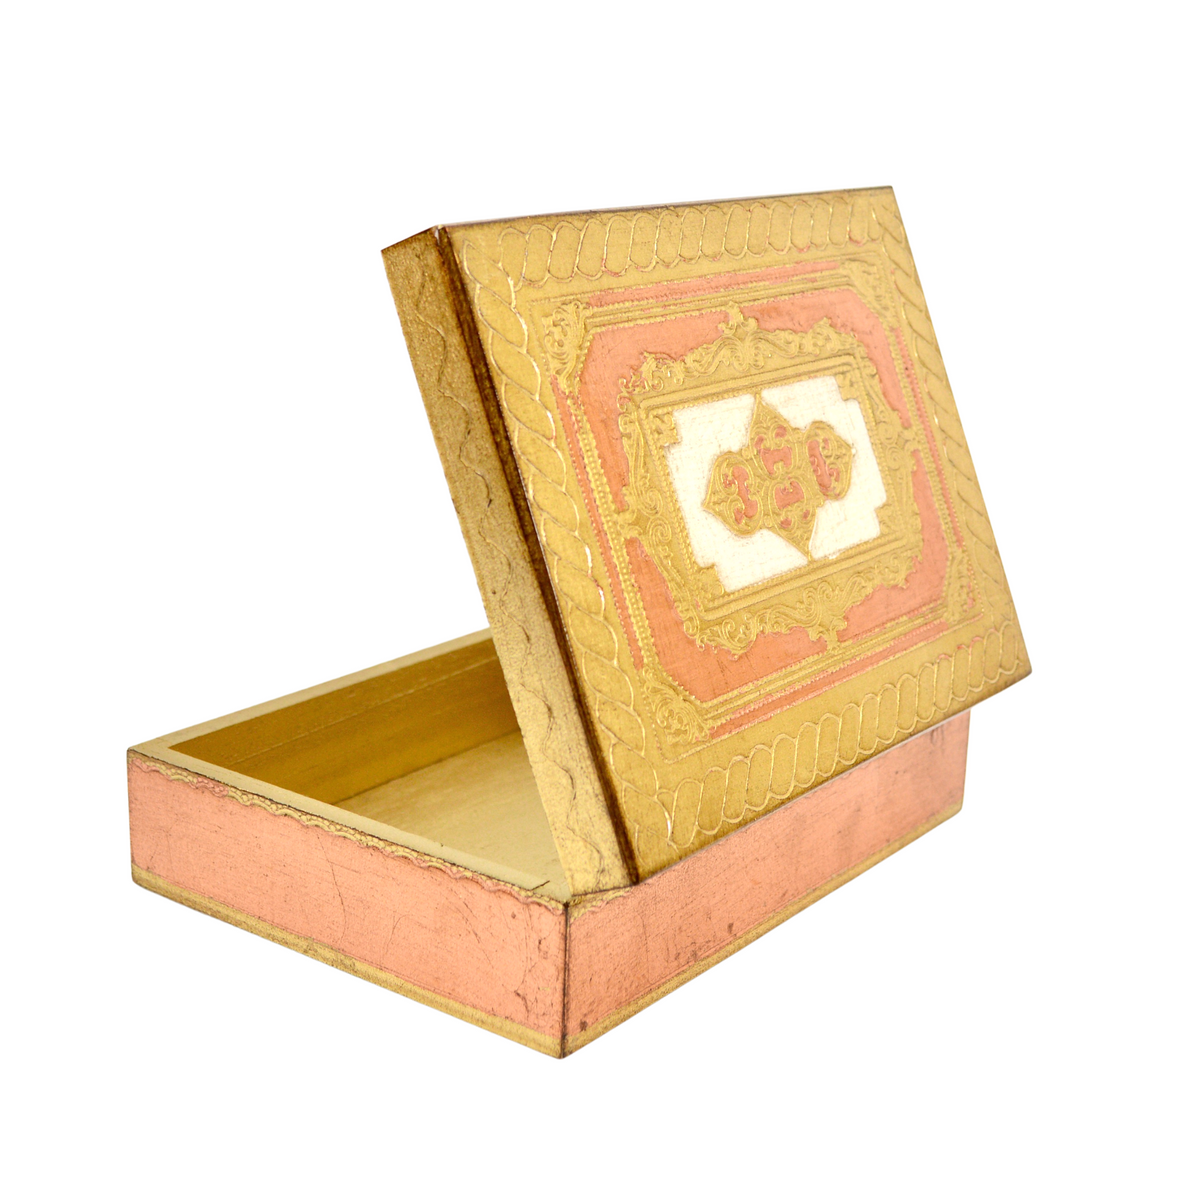 Florentine Carved Wood Box with Lid, Jewelry, Keepsake Box - My Italian Decor